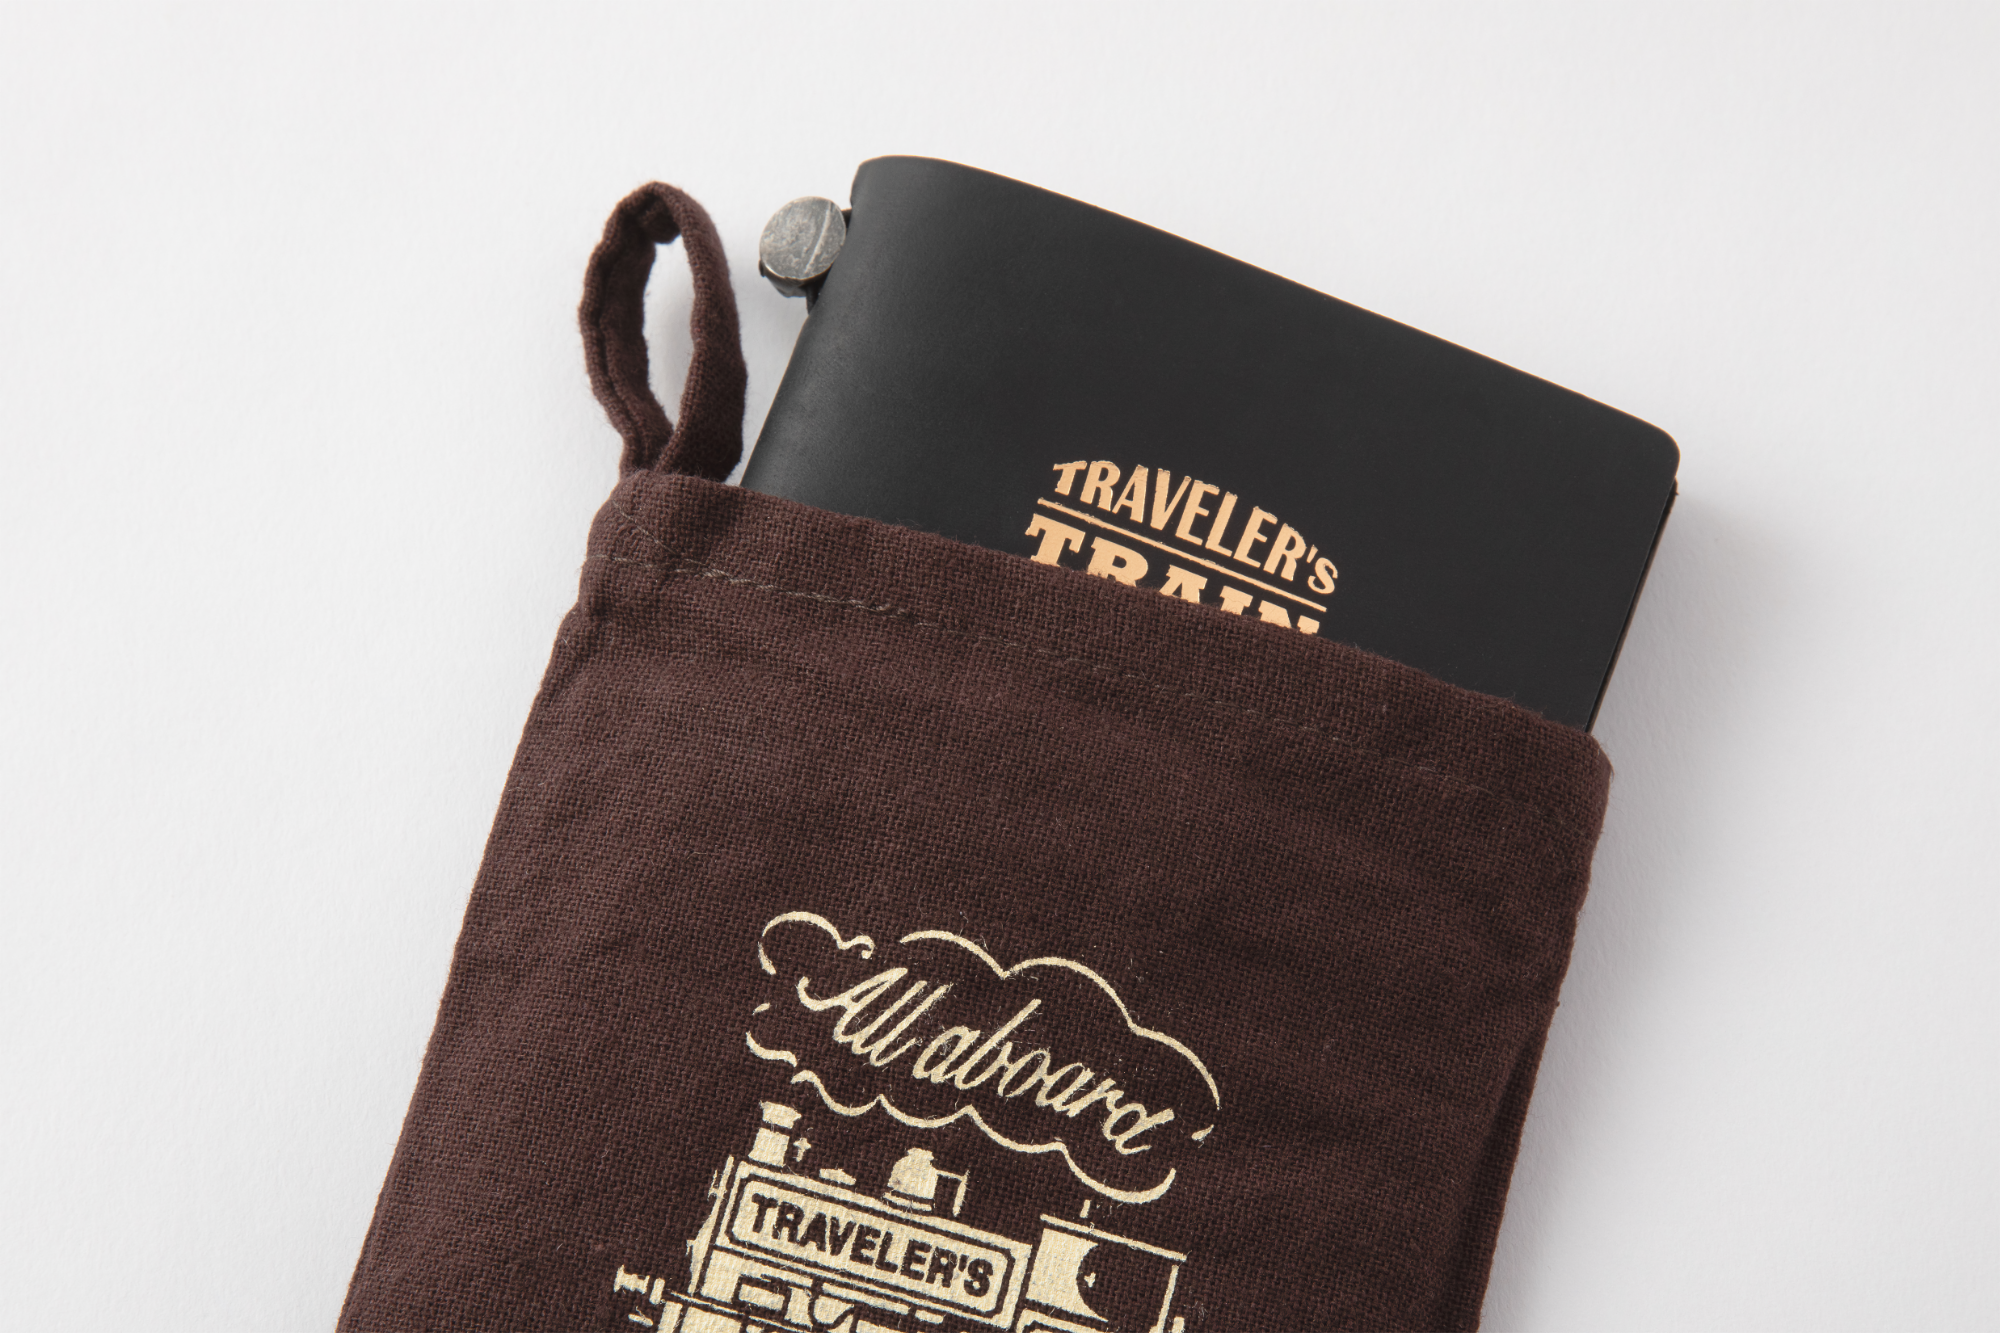 Traveler’s Company Traveler's notebook – Passport Size Limited Set Train